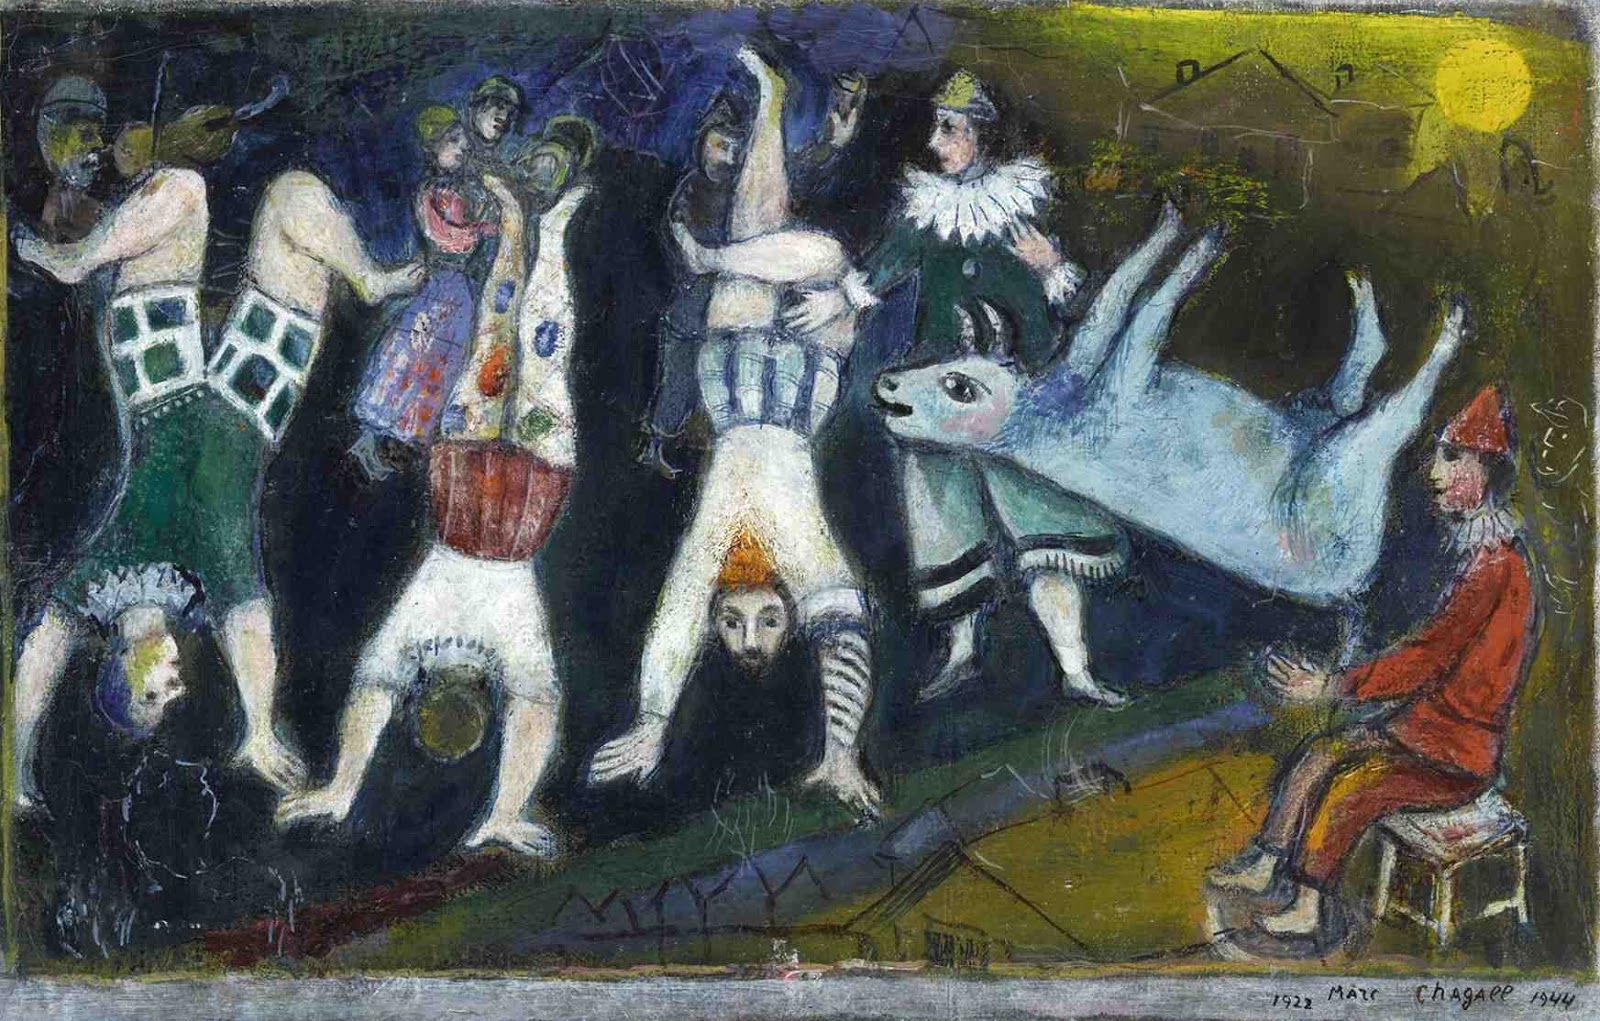 Marc+Chagall-1887-1985 (39).jpg